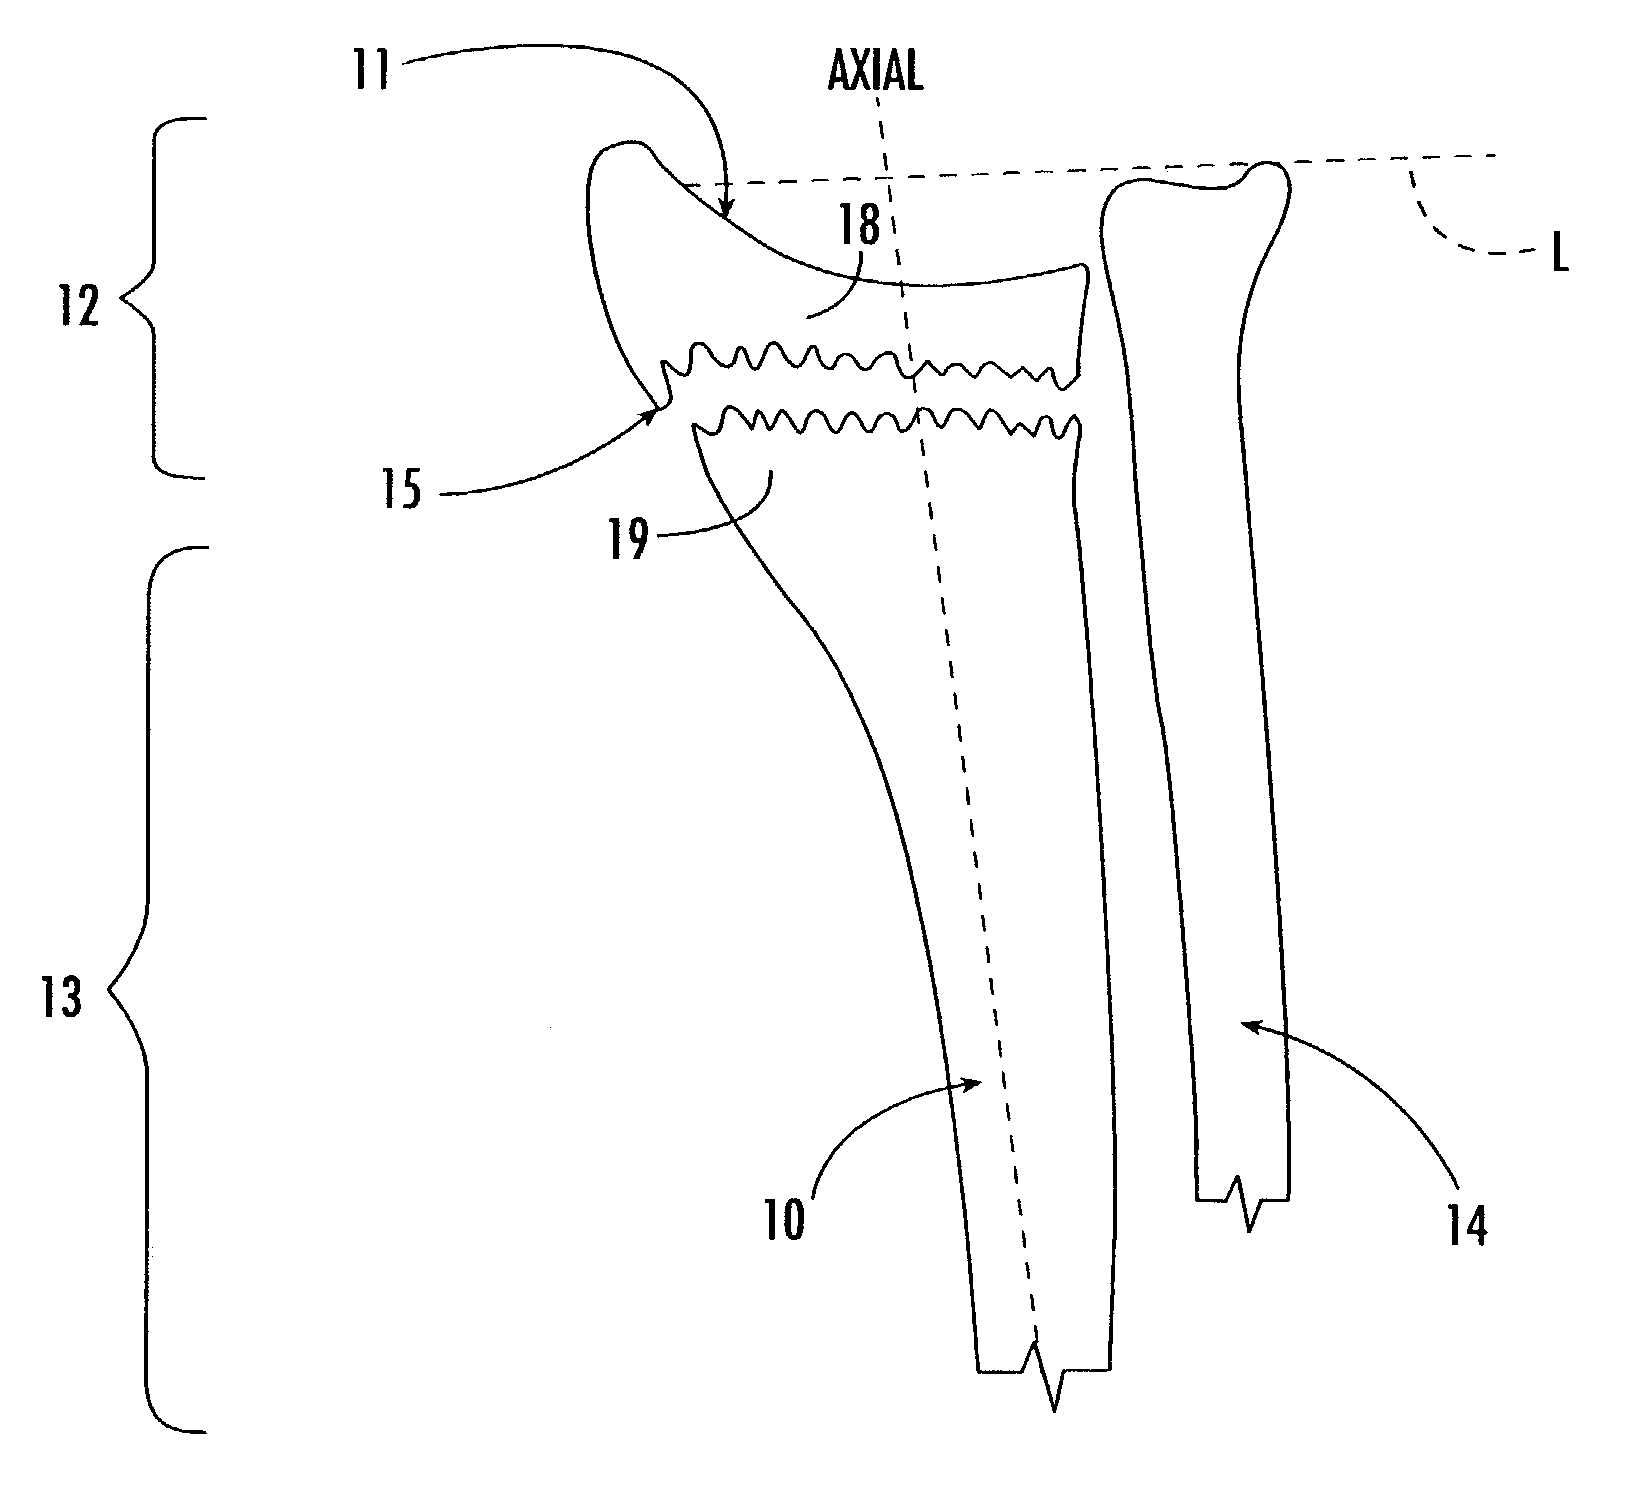 Intramedullary interlocking fixation device for the distal radius